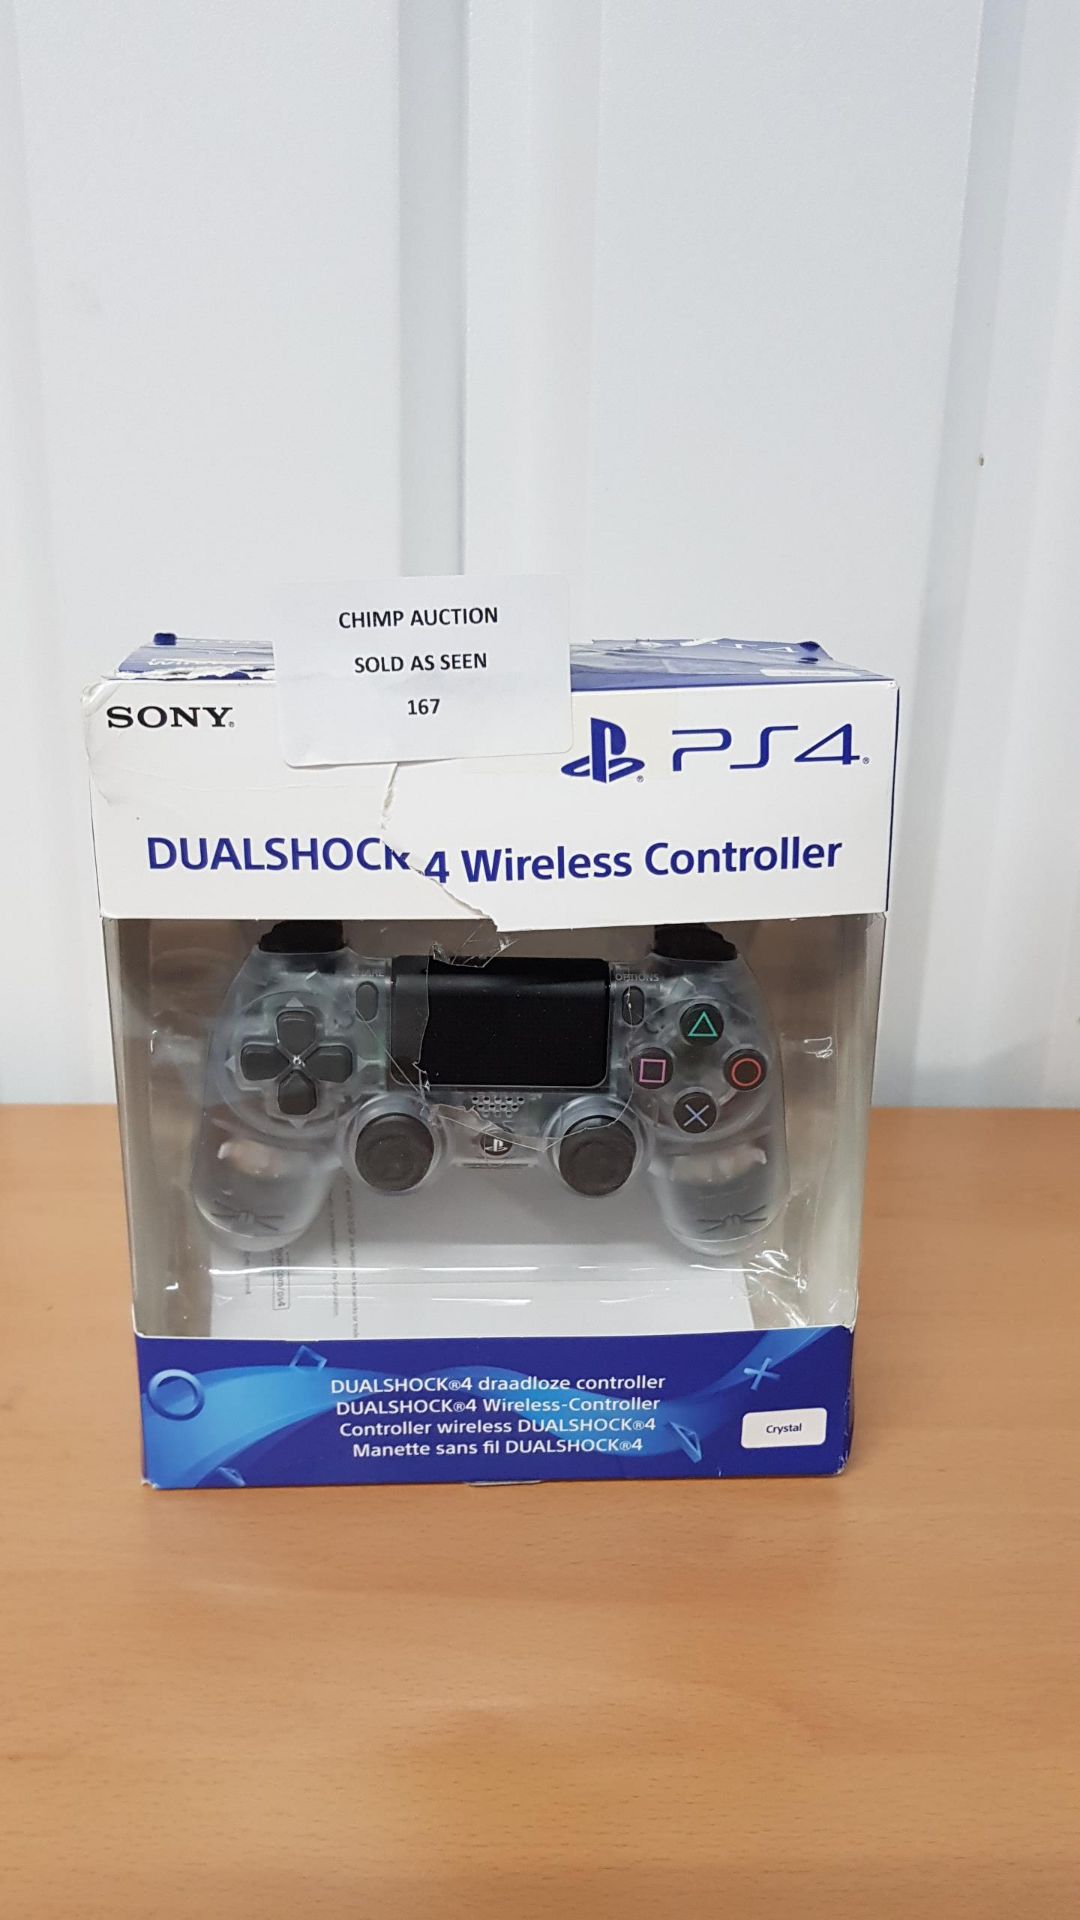 Sony PS4 Dualshock 4 wireless controller RRP £59.99.